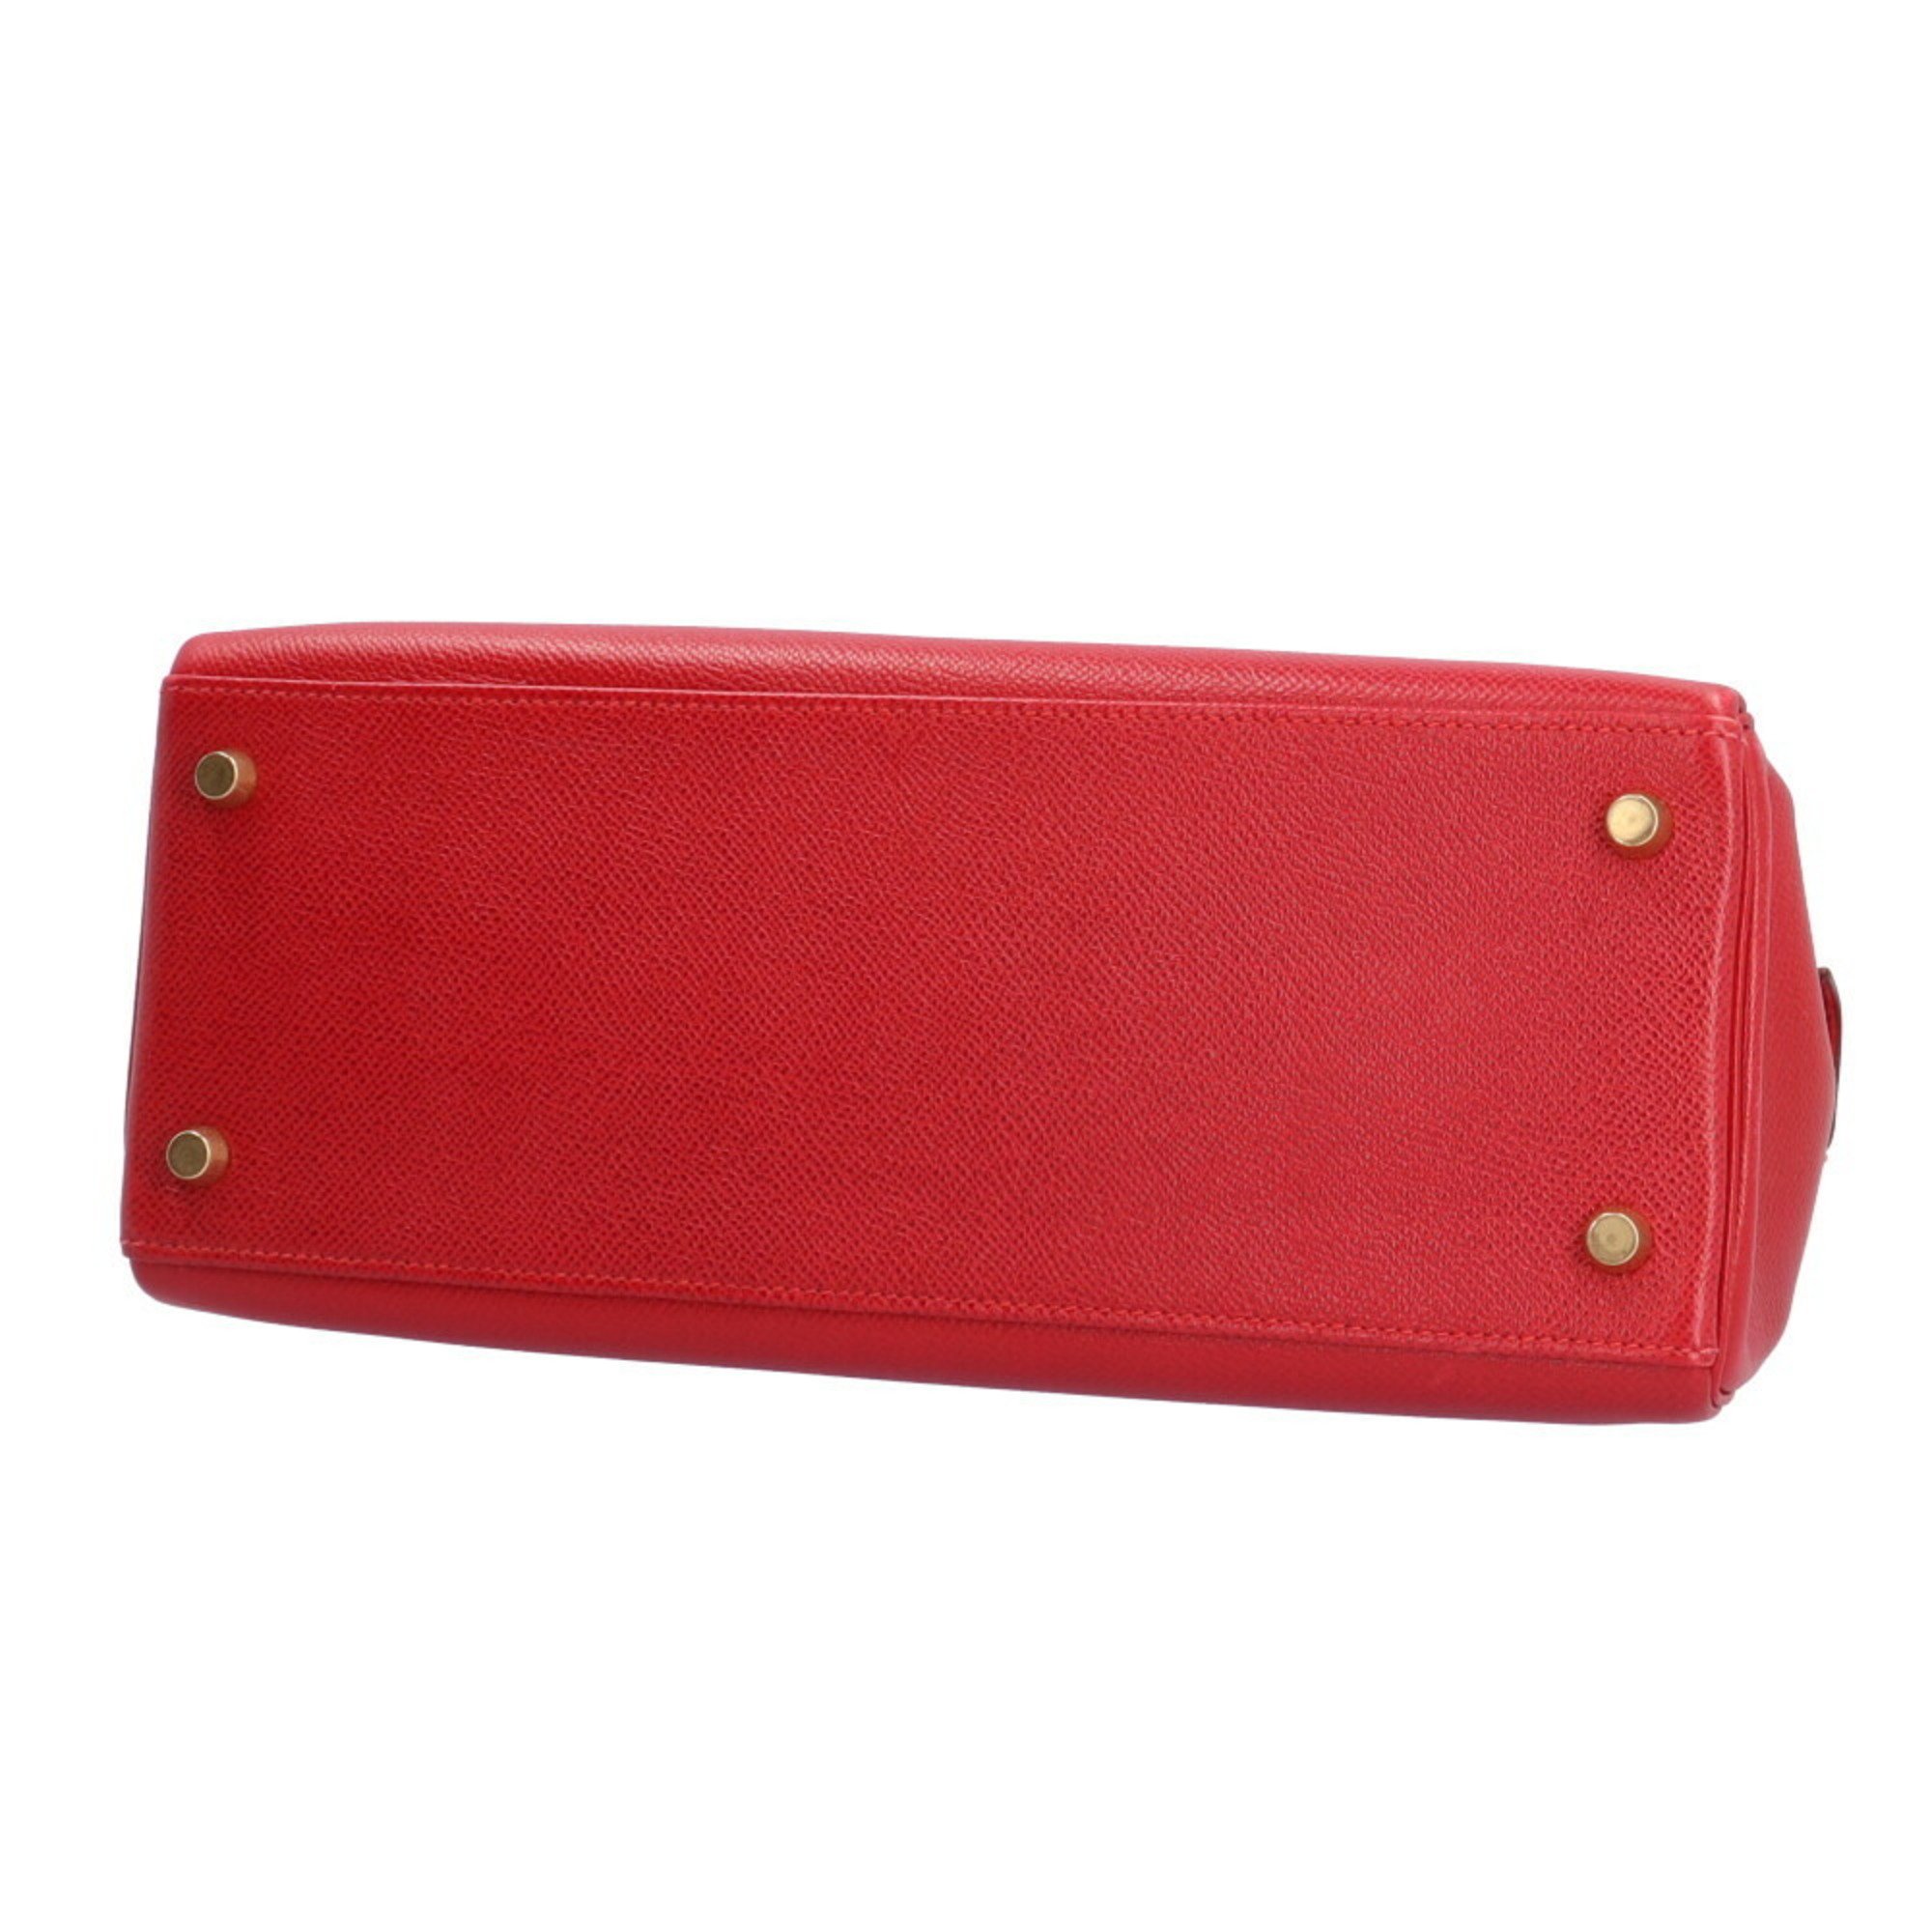 Hermes Kelly 28 Shoulder Bag Leather Red Ladies HERMES